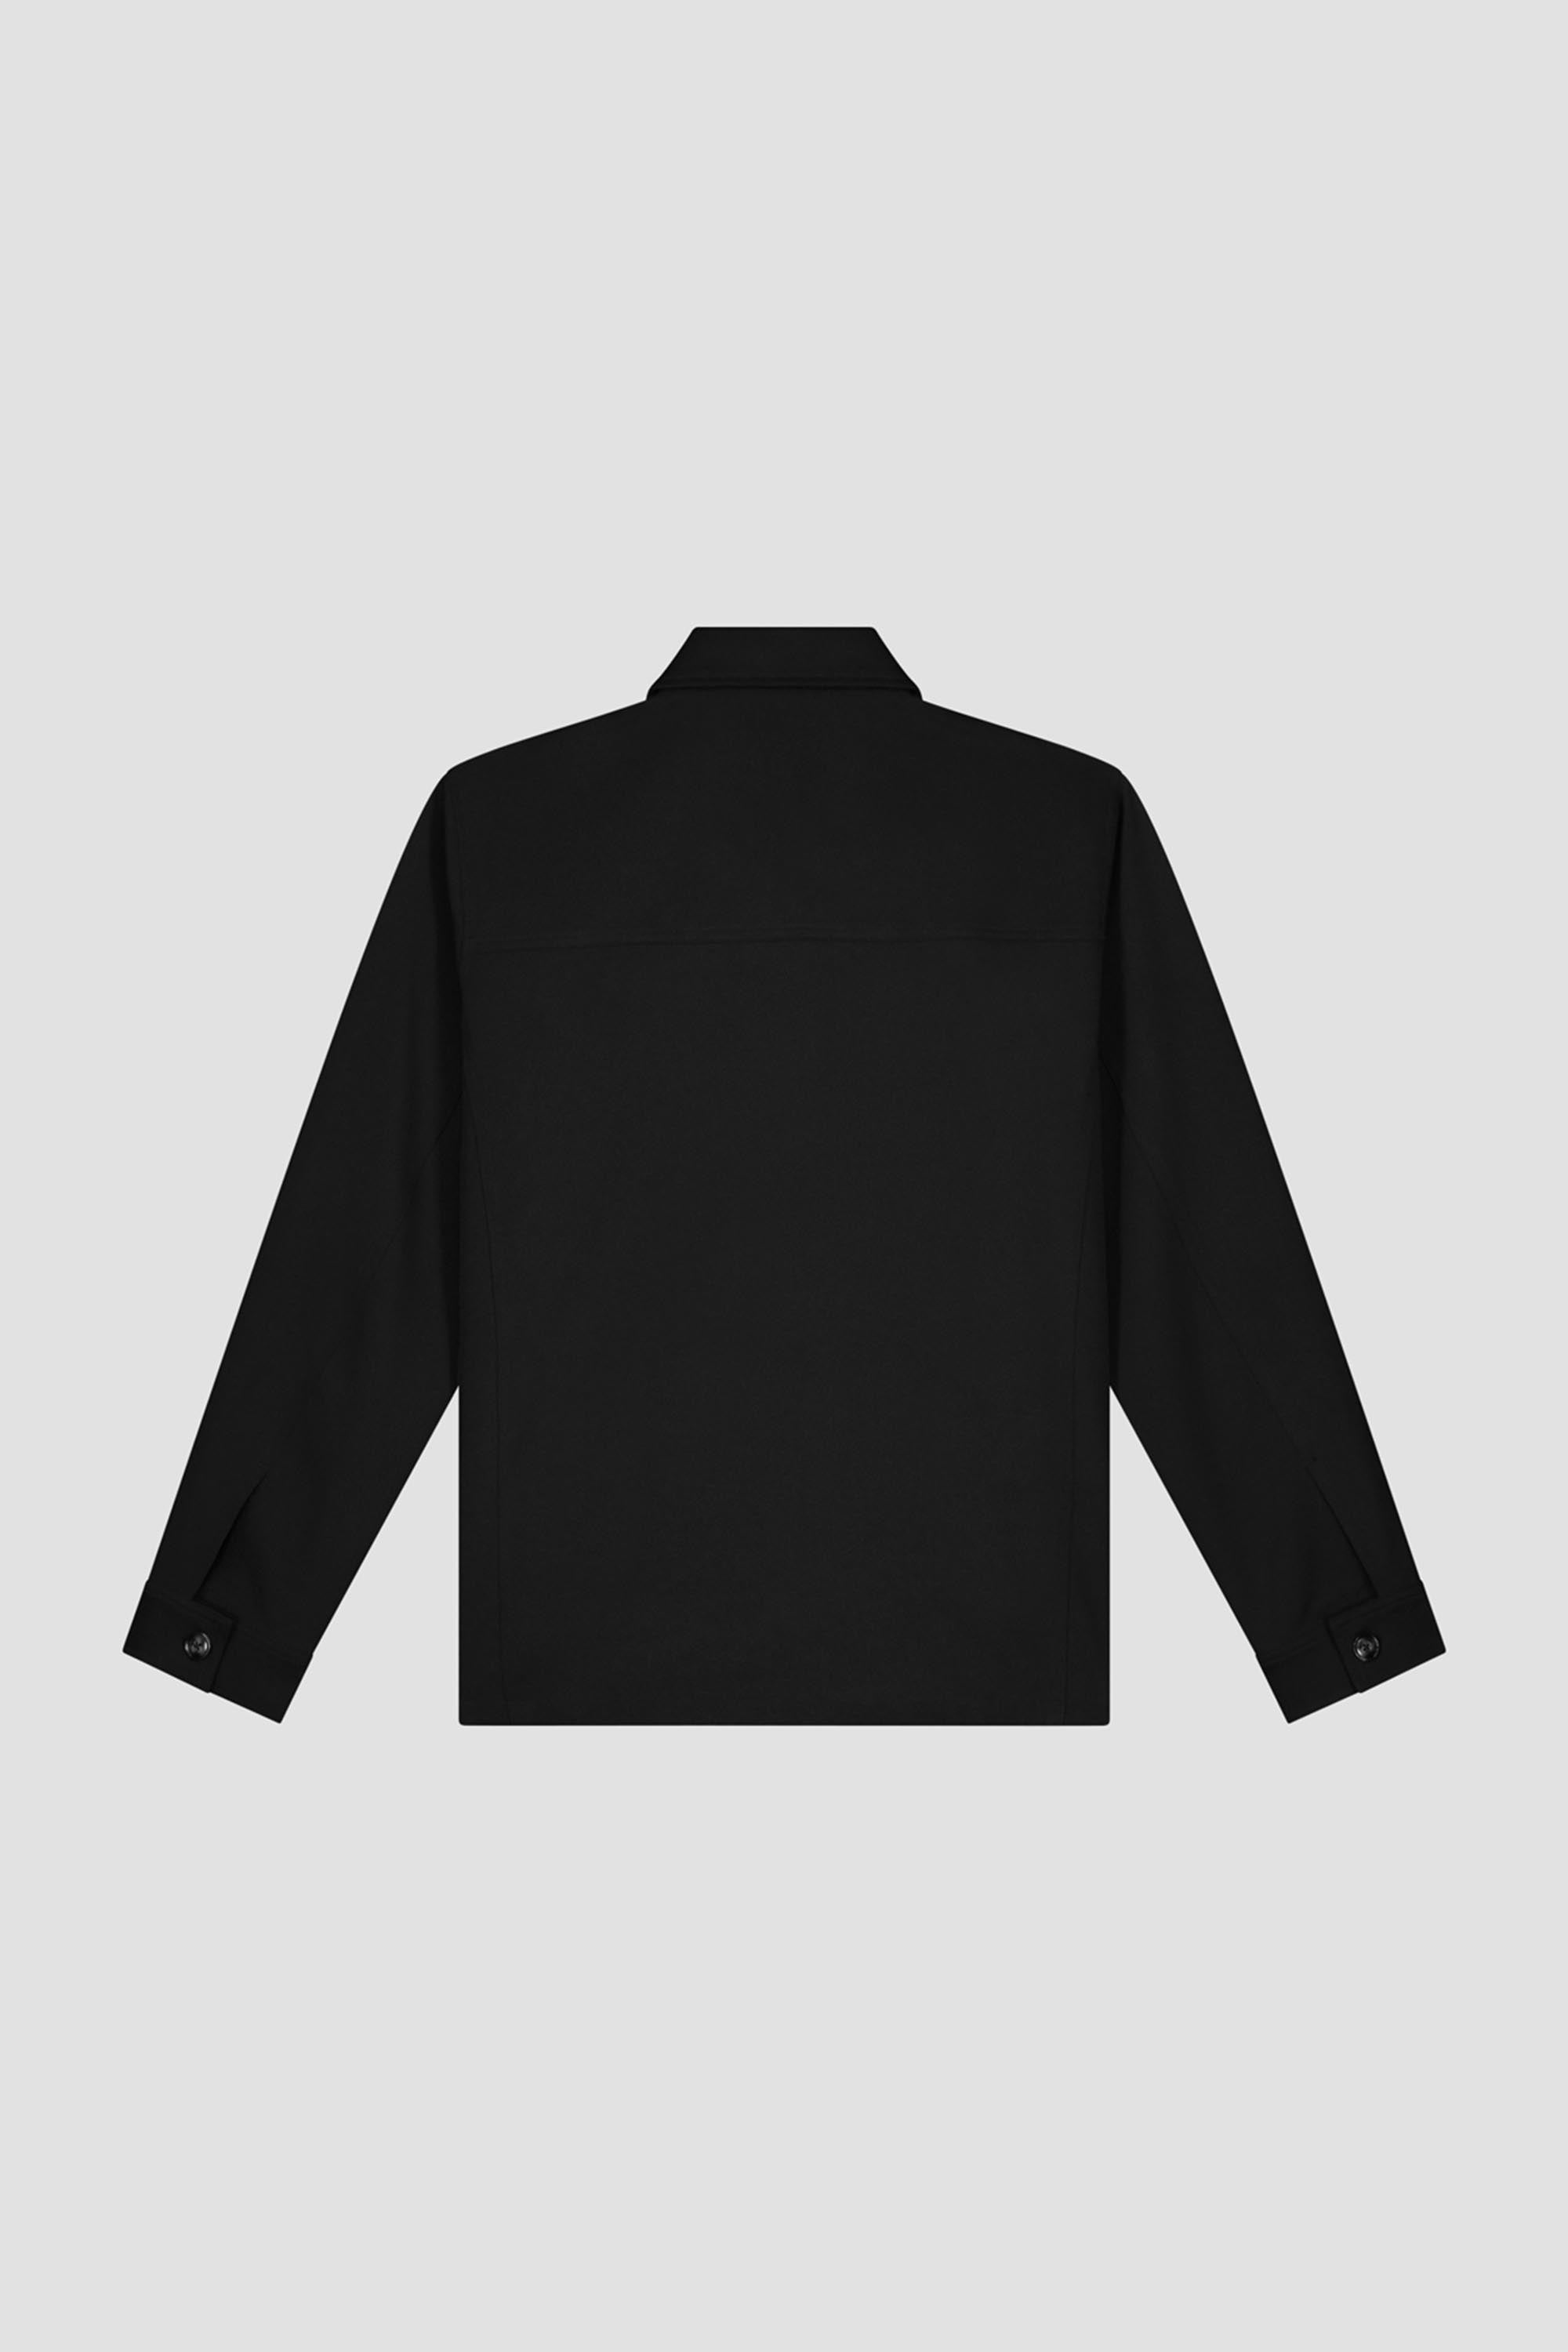 ØLÅF Workwear Blazer - Black